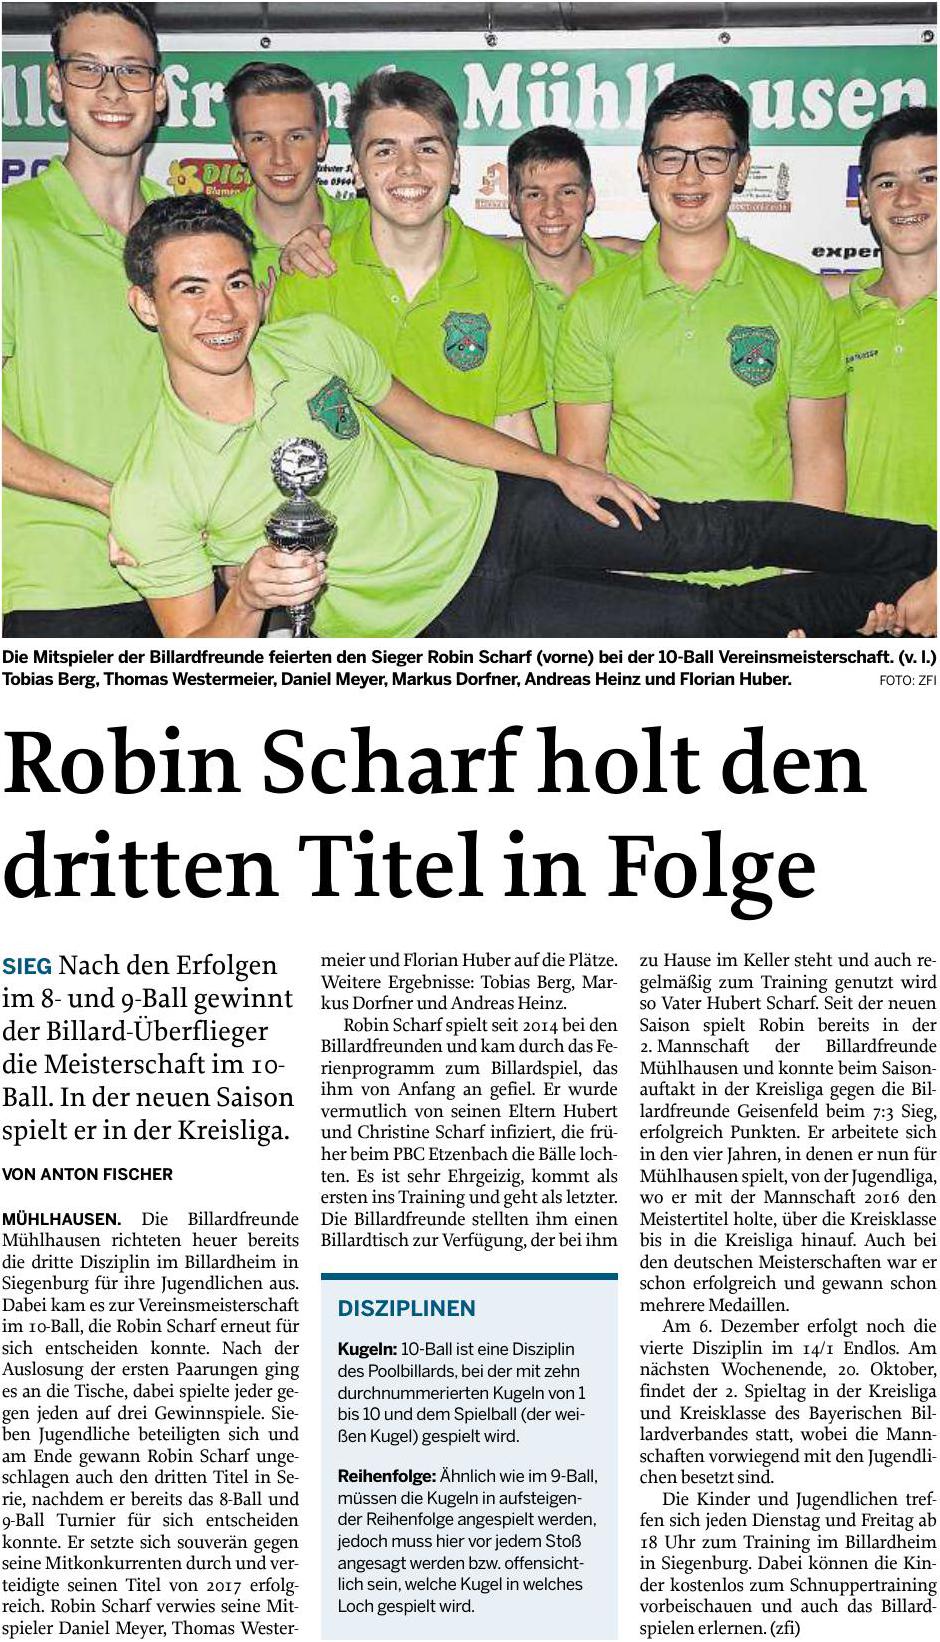 16.10.18 Robin Scharf holten dritten Titel in Folge